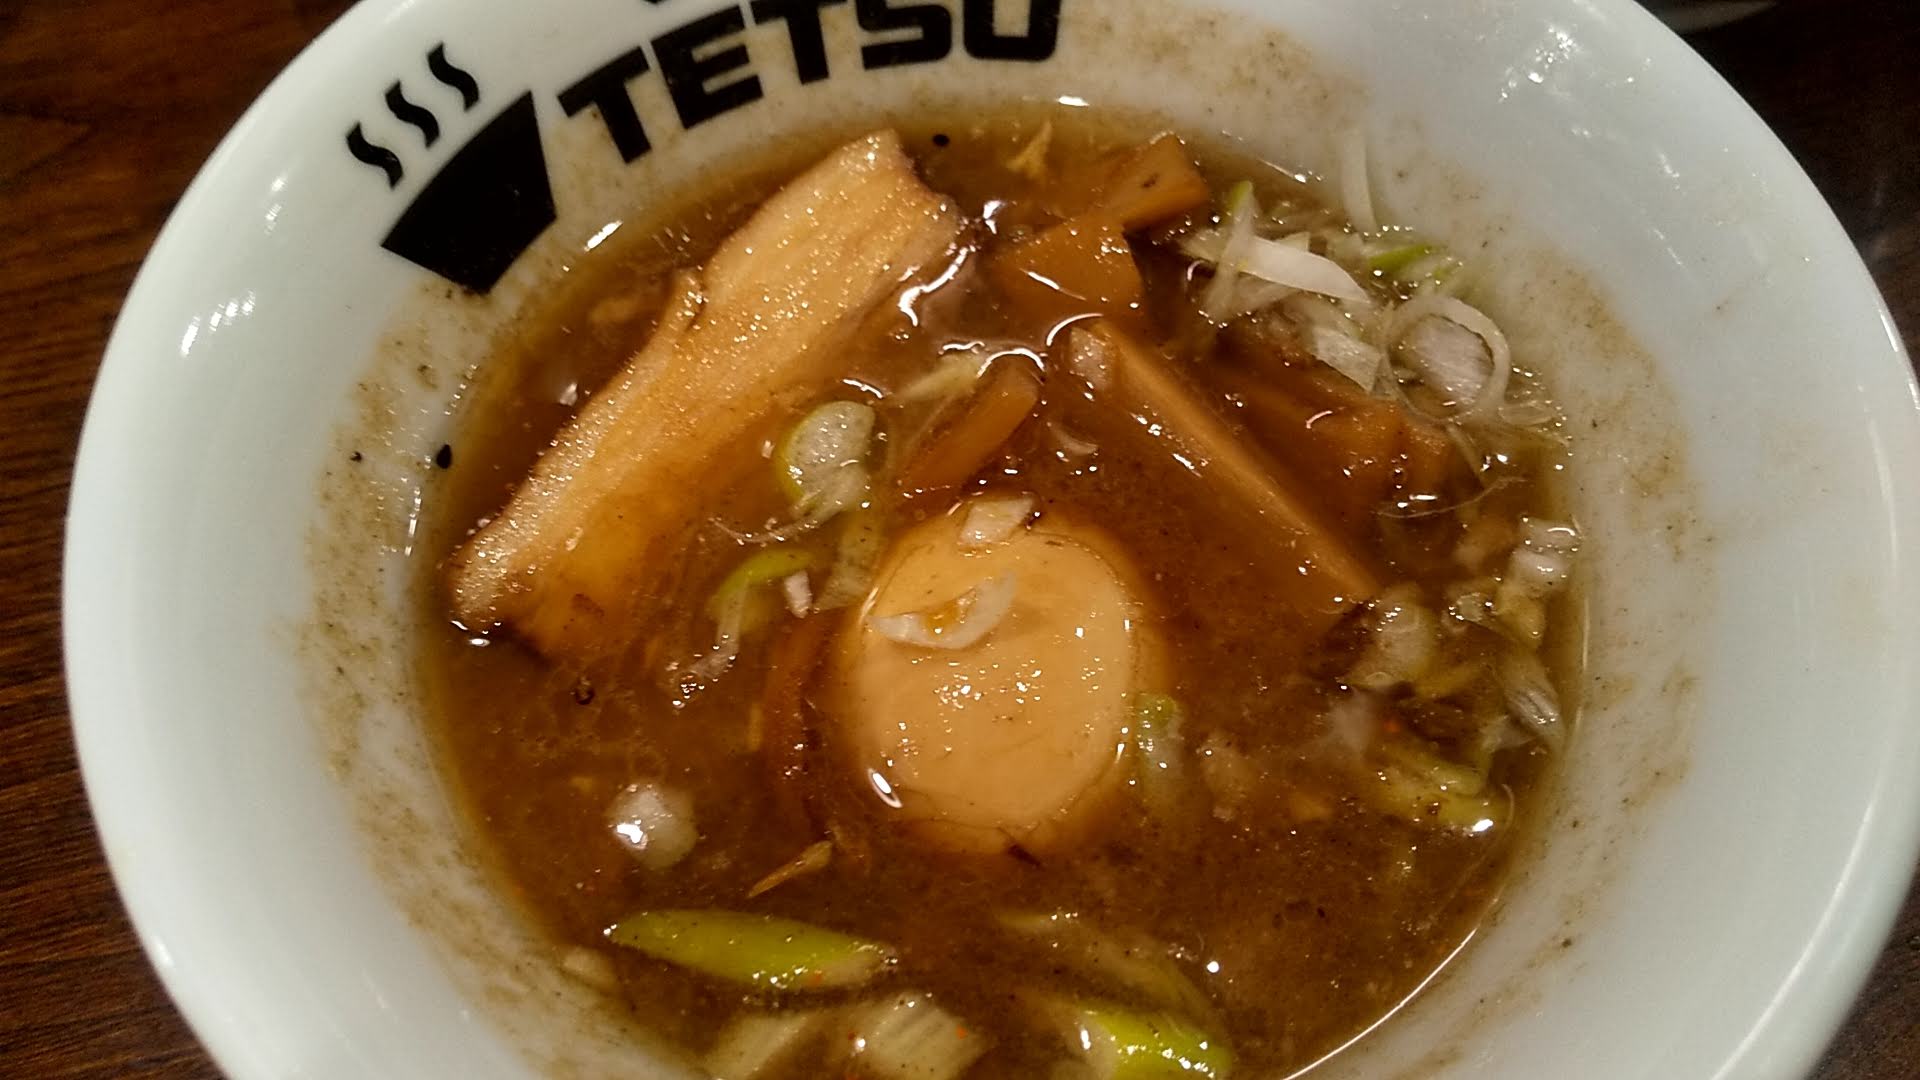 TETSU渋谷店の特製つけ麺のつけ汁アップ